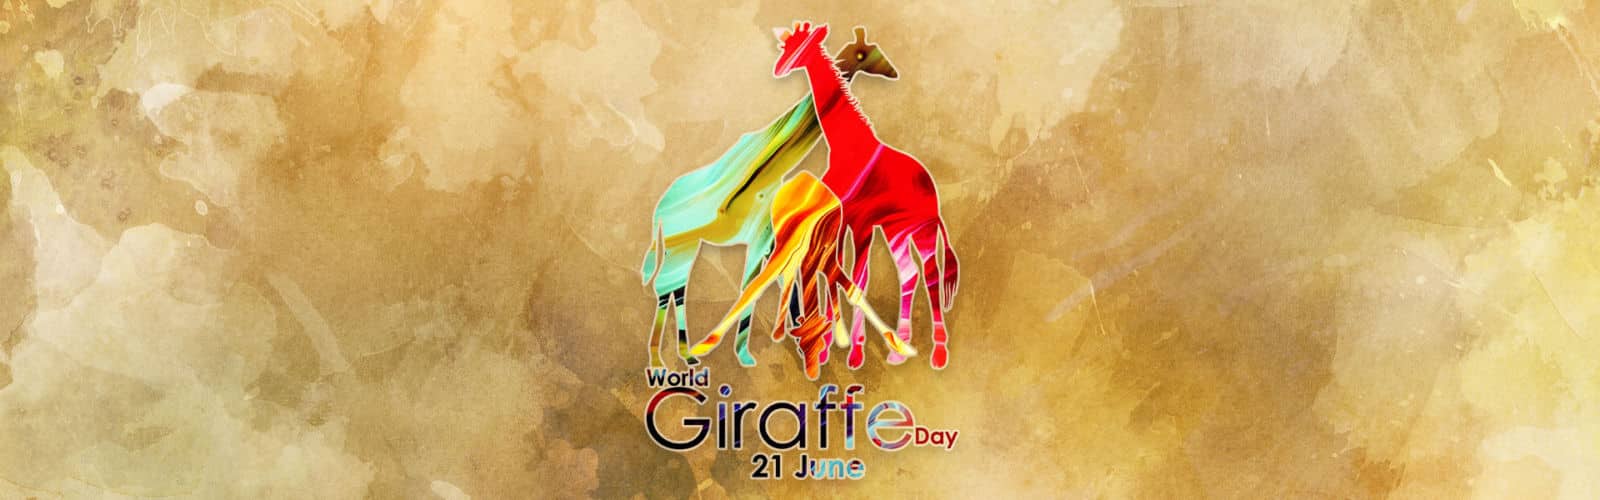 World Giraffe Day – 21 June 2017